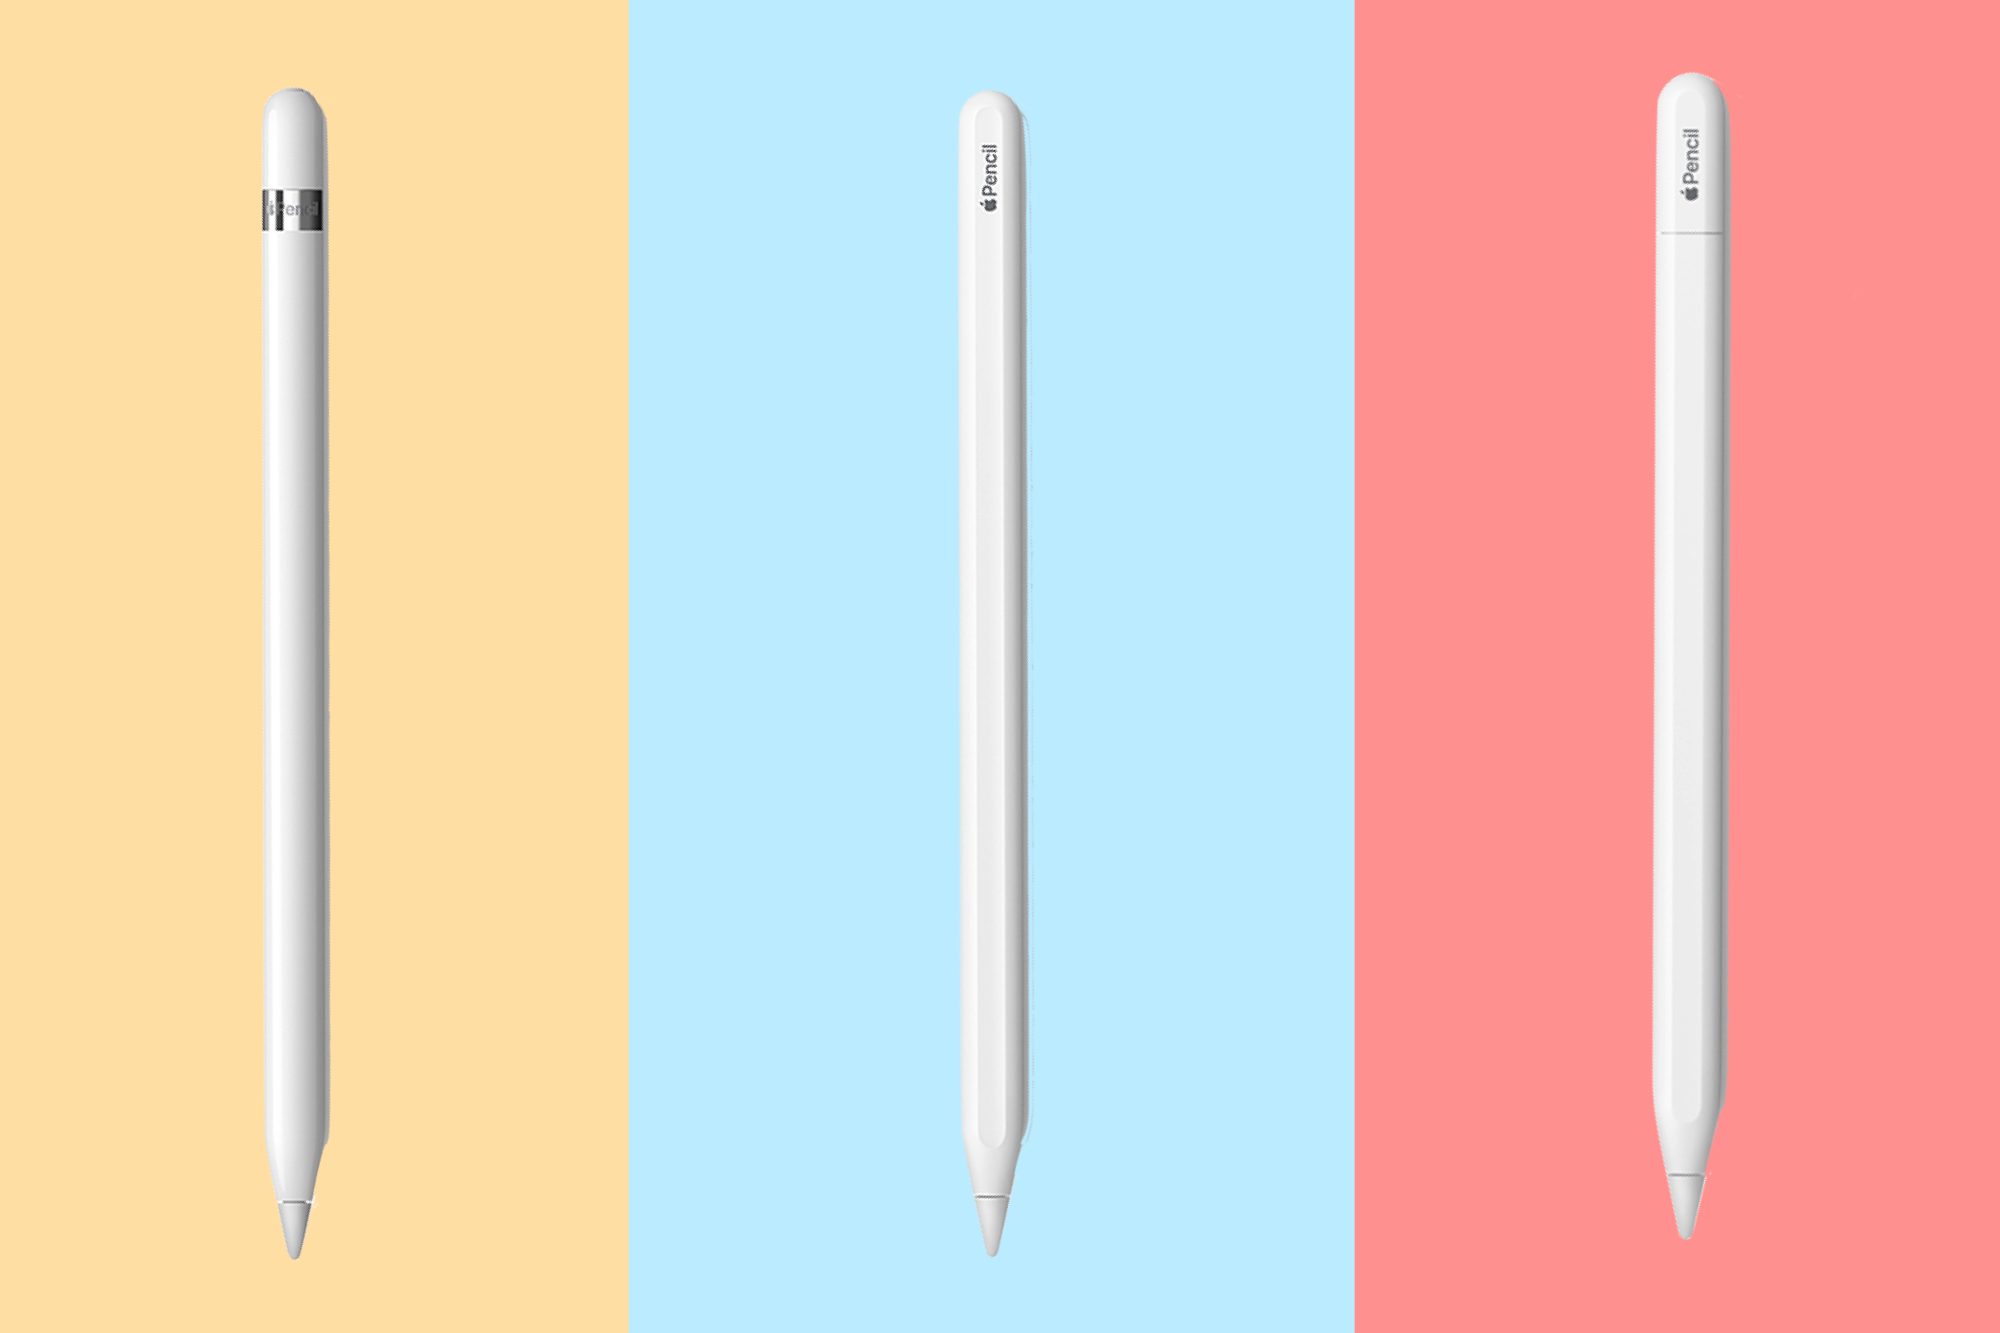 Apple Pencil 2: 8 ways it's better than the original